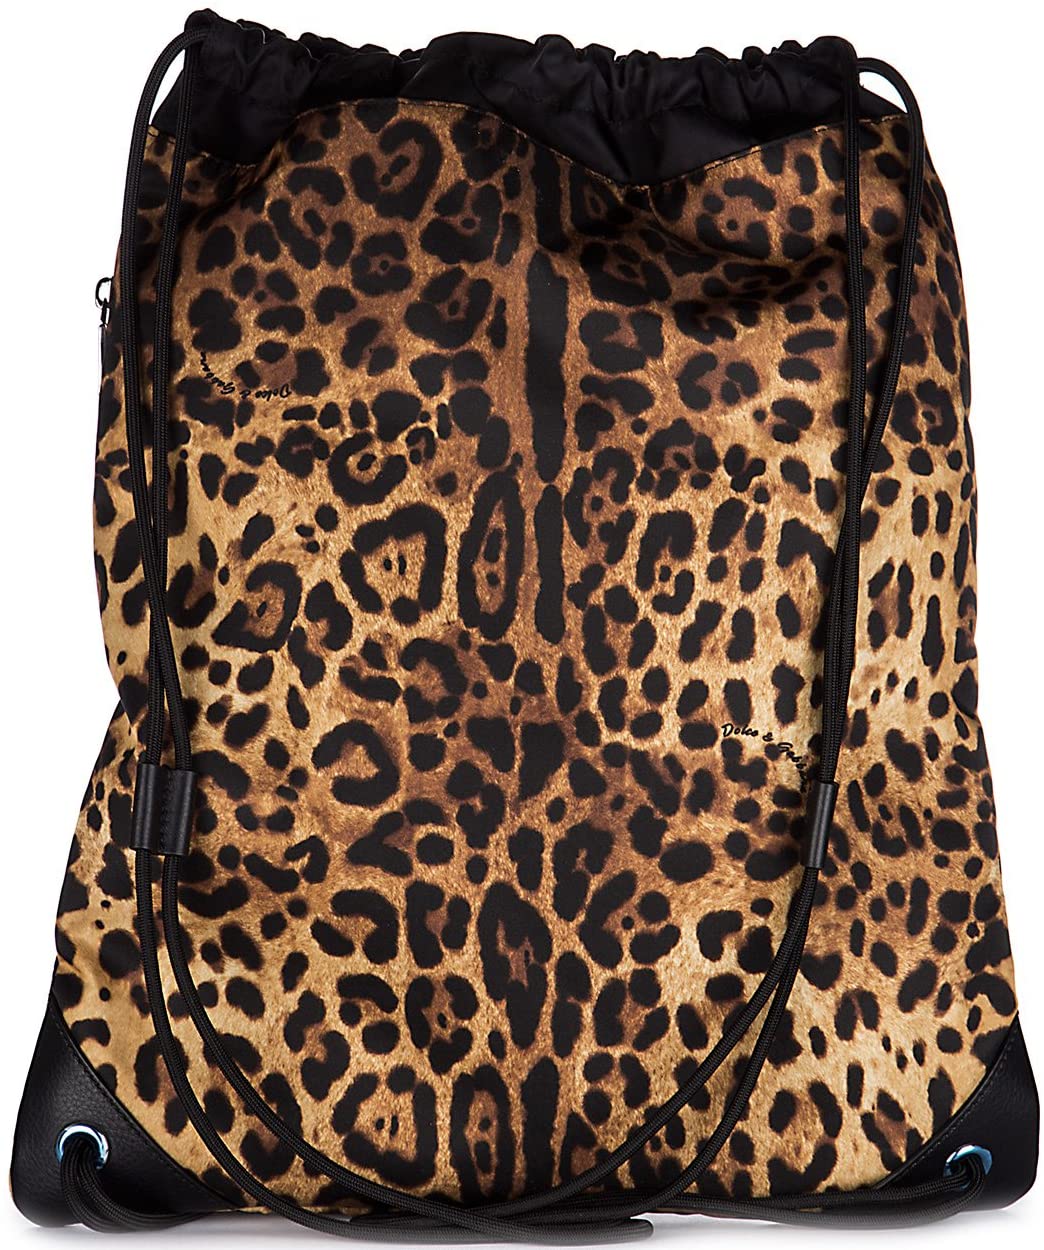 Dolce & Gabbana Leopard Drawstring Backpack